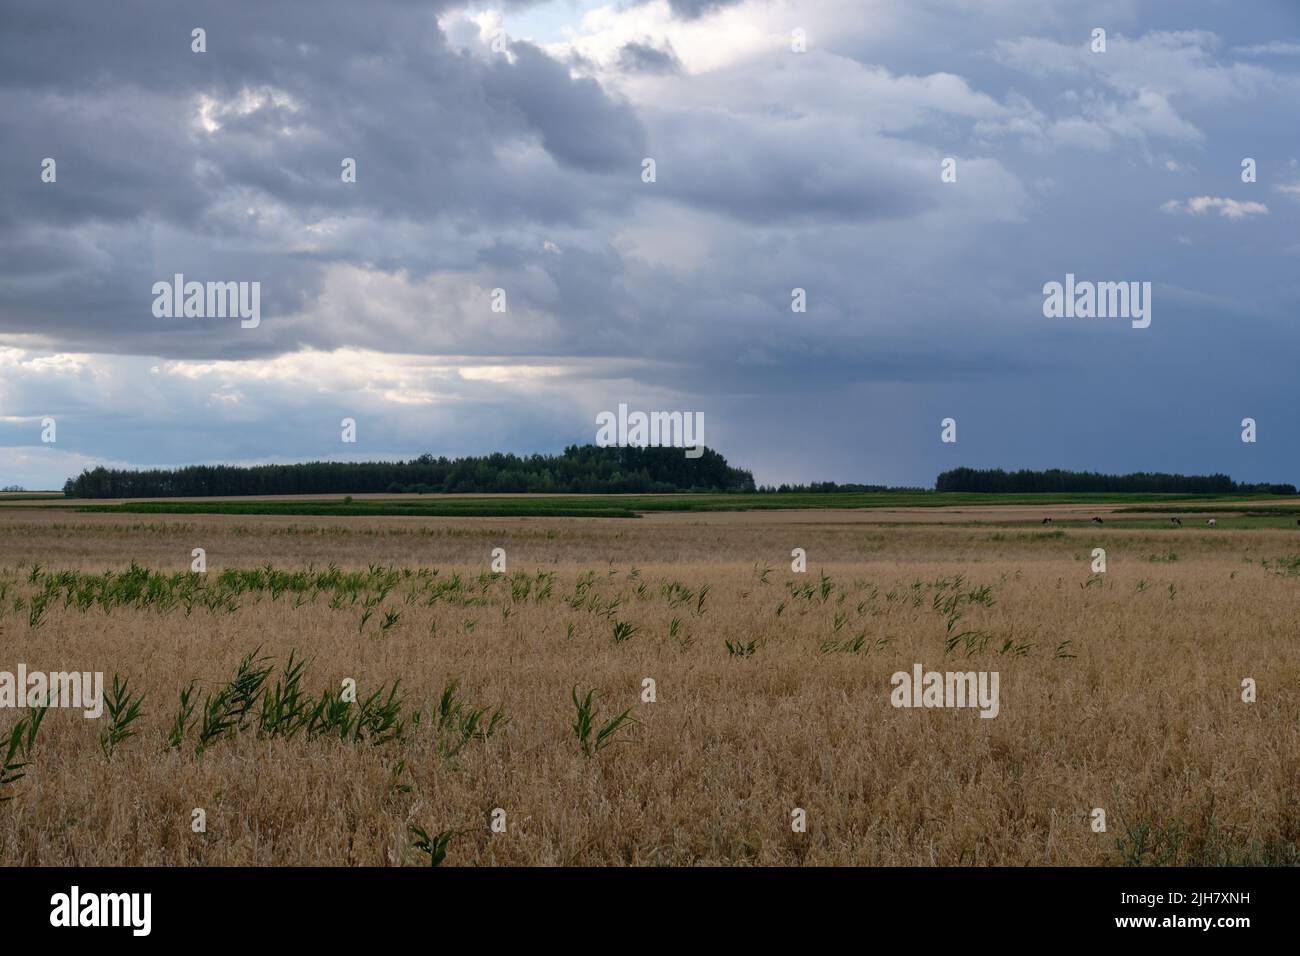 Rye field in sunset light under cloudy sky in summer, podlaskie Voivodship, Poland, Europe Stock Photo